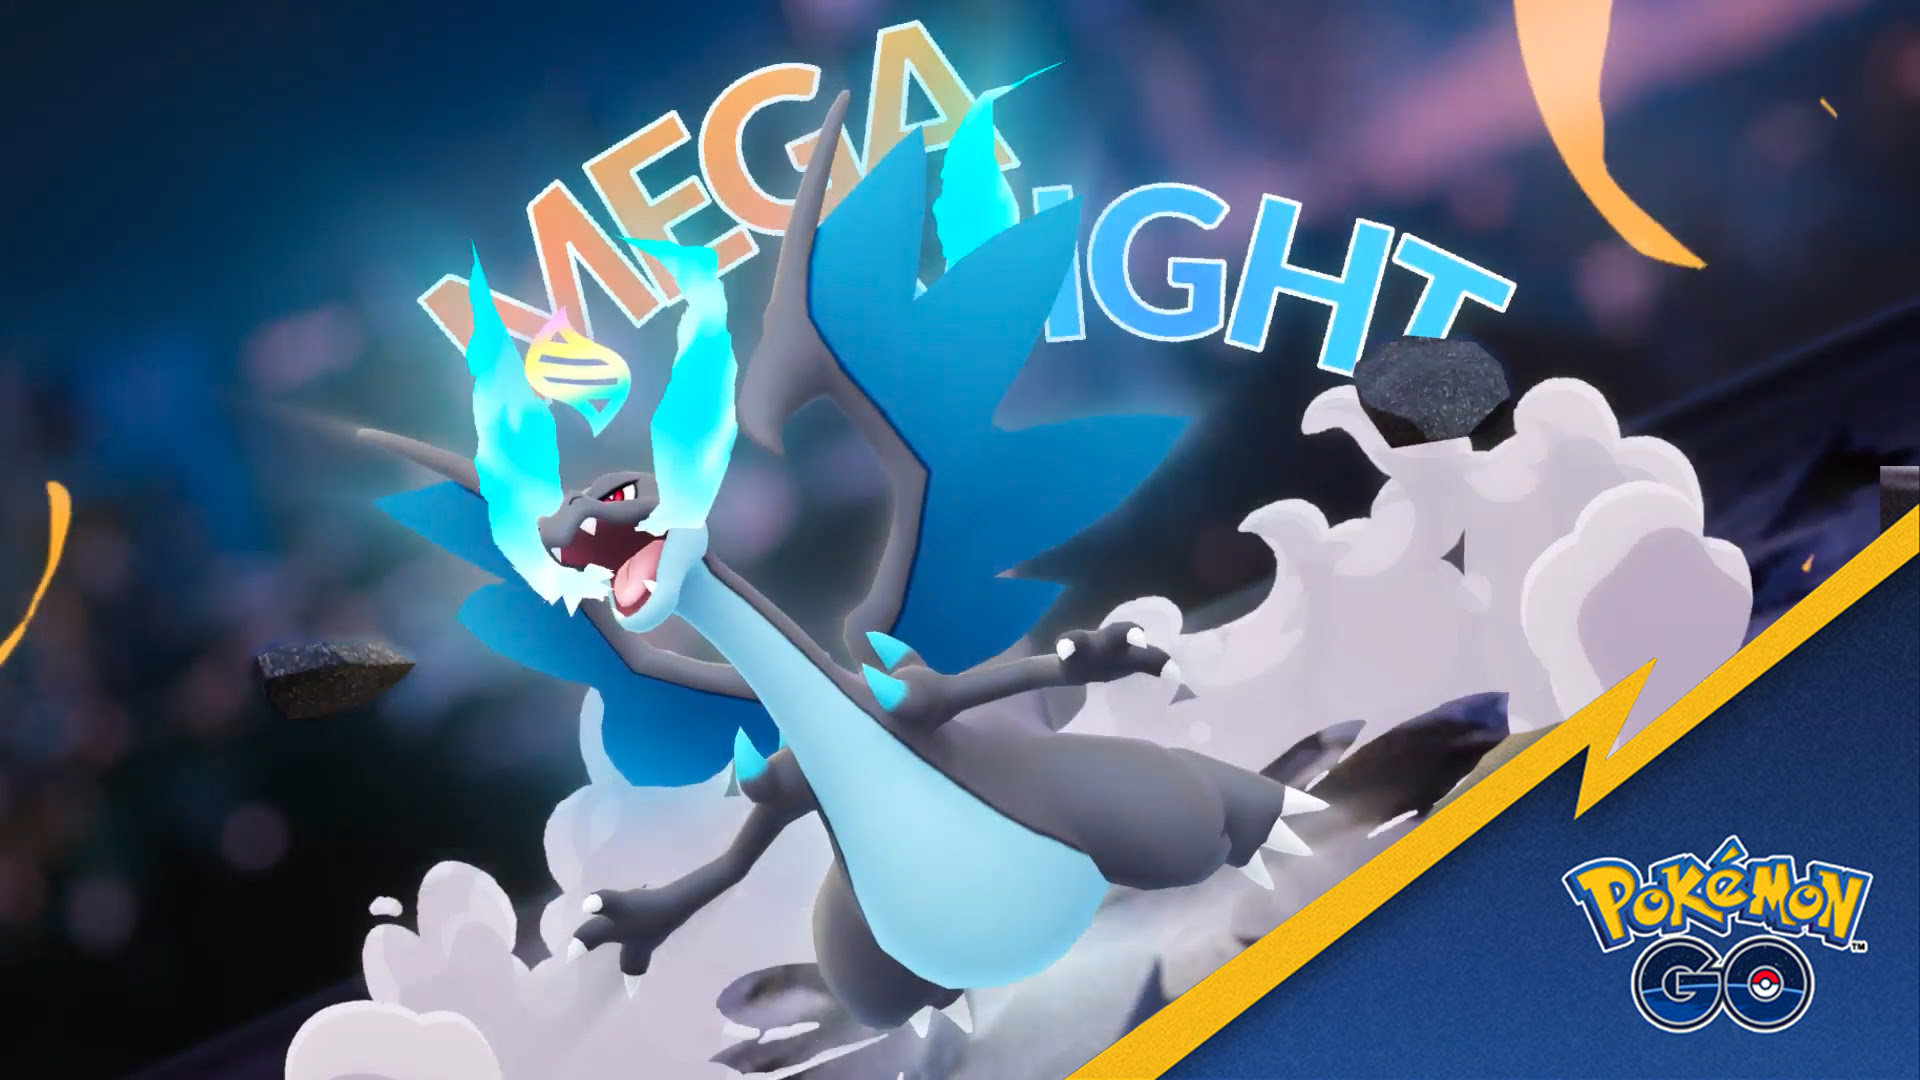 Pokémon Go: Mega Alakazam mega raid guide